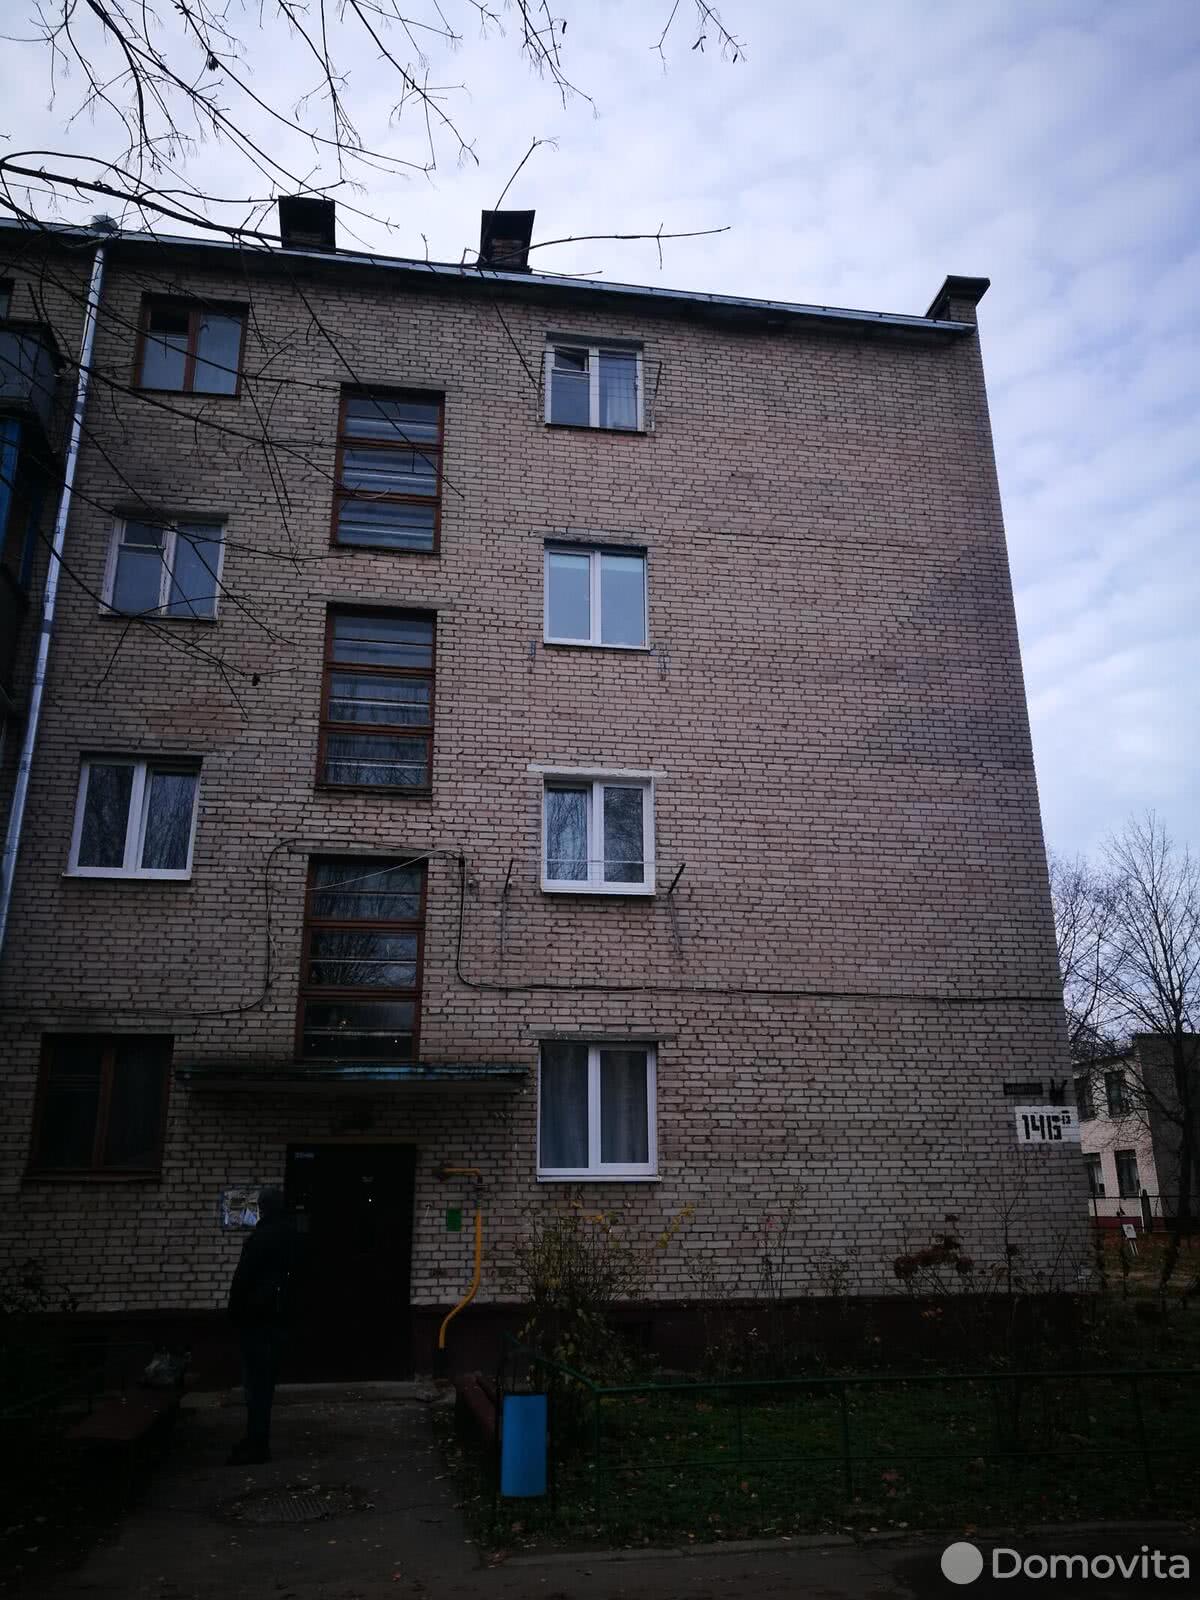 Цена продажи квартиры, Барановичи, ул. Советская, д. 146Б